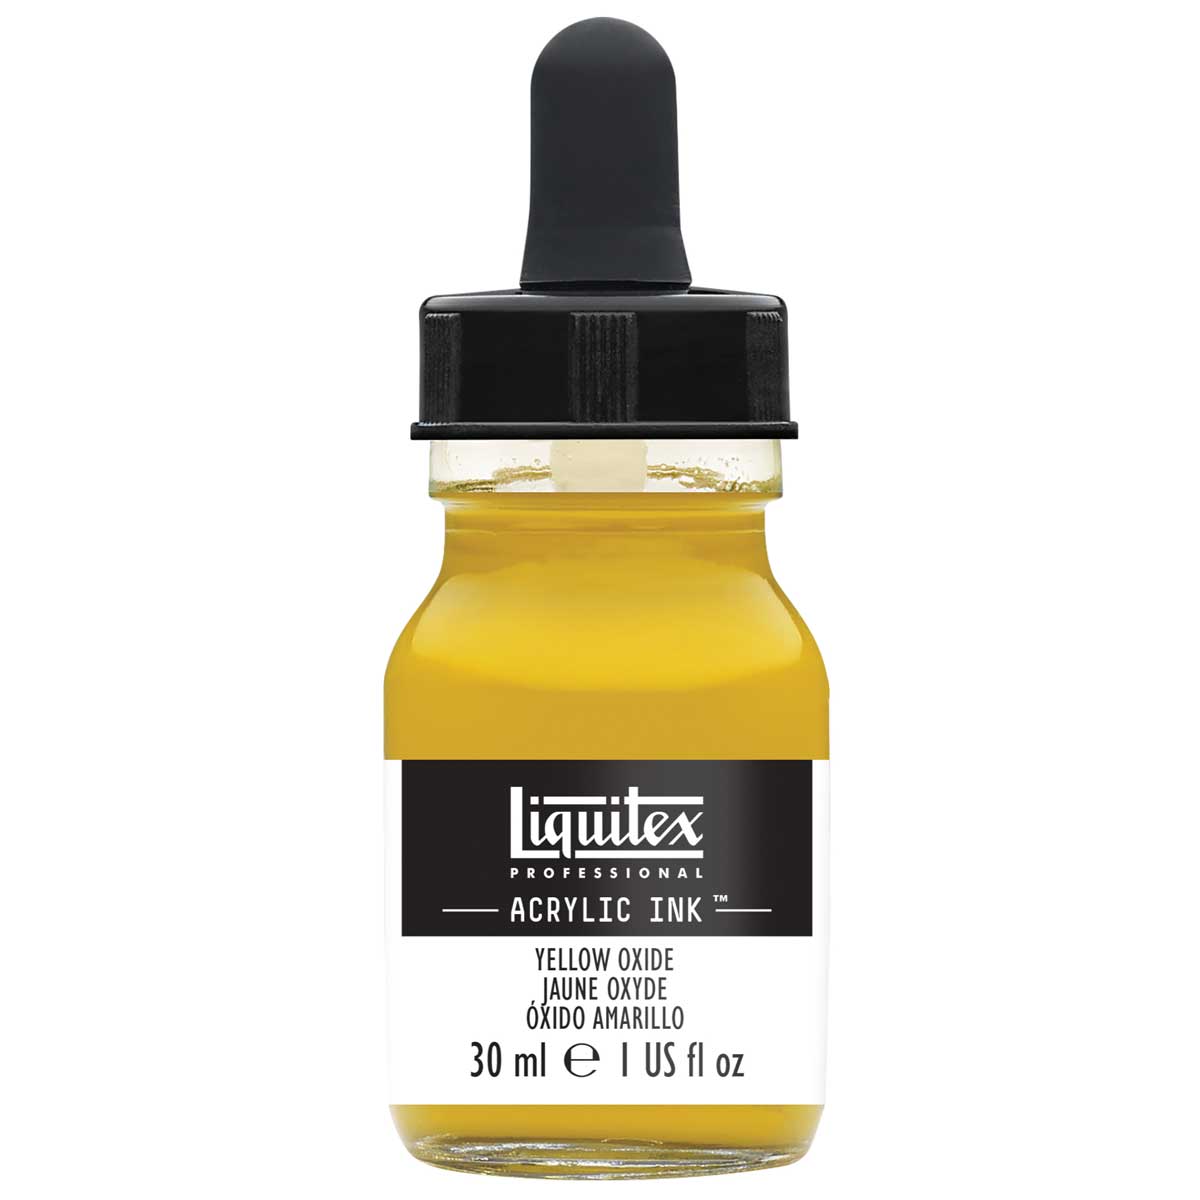 Liquitex Professional Acrylic Ink - Yellow Oxide 30ml/1oz